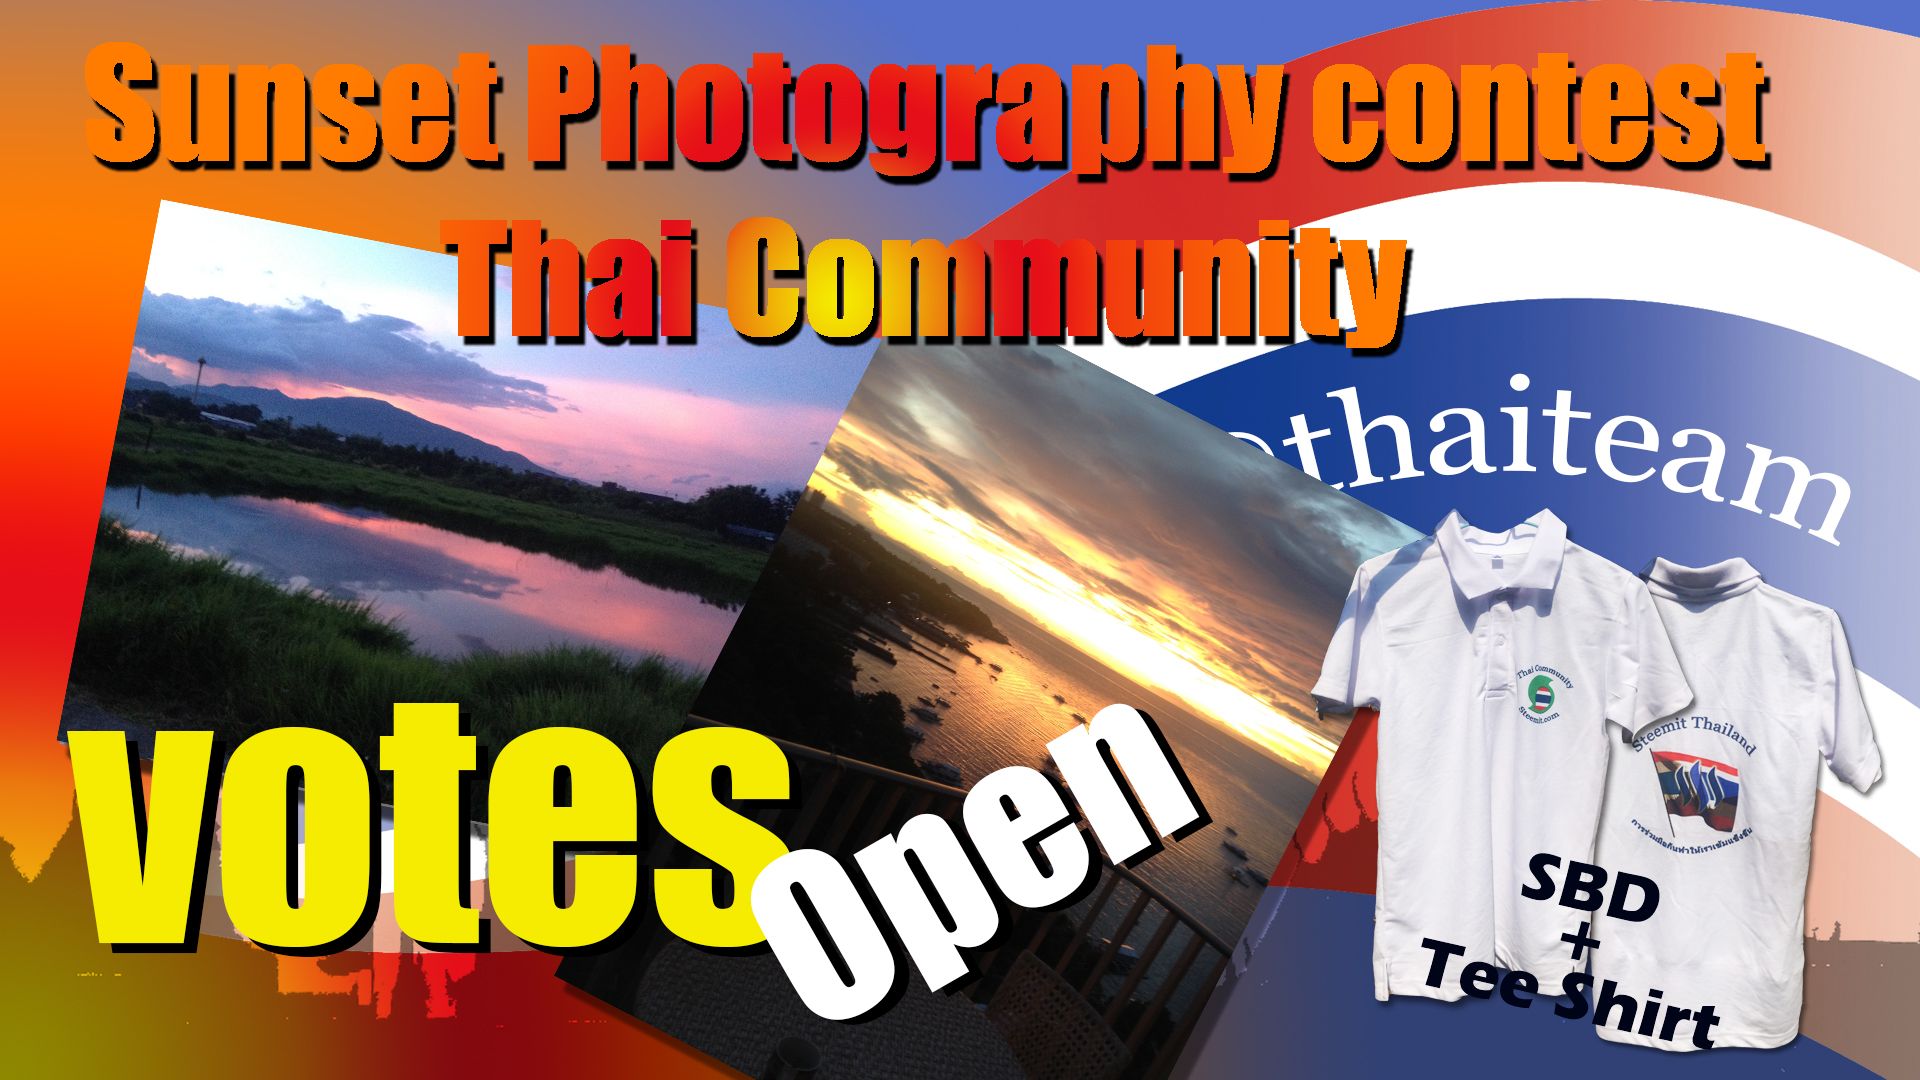 New Contest sunset Photography.jpg